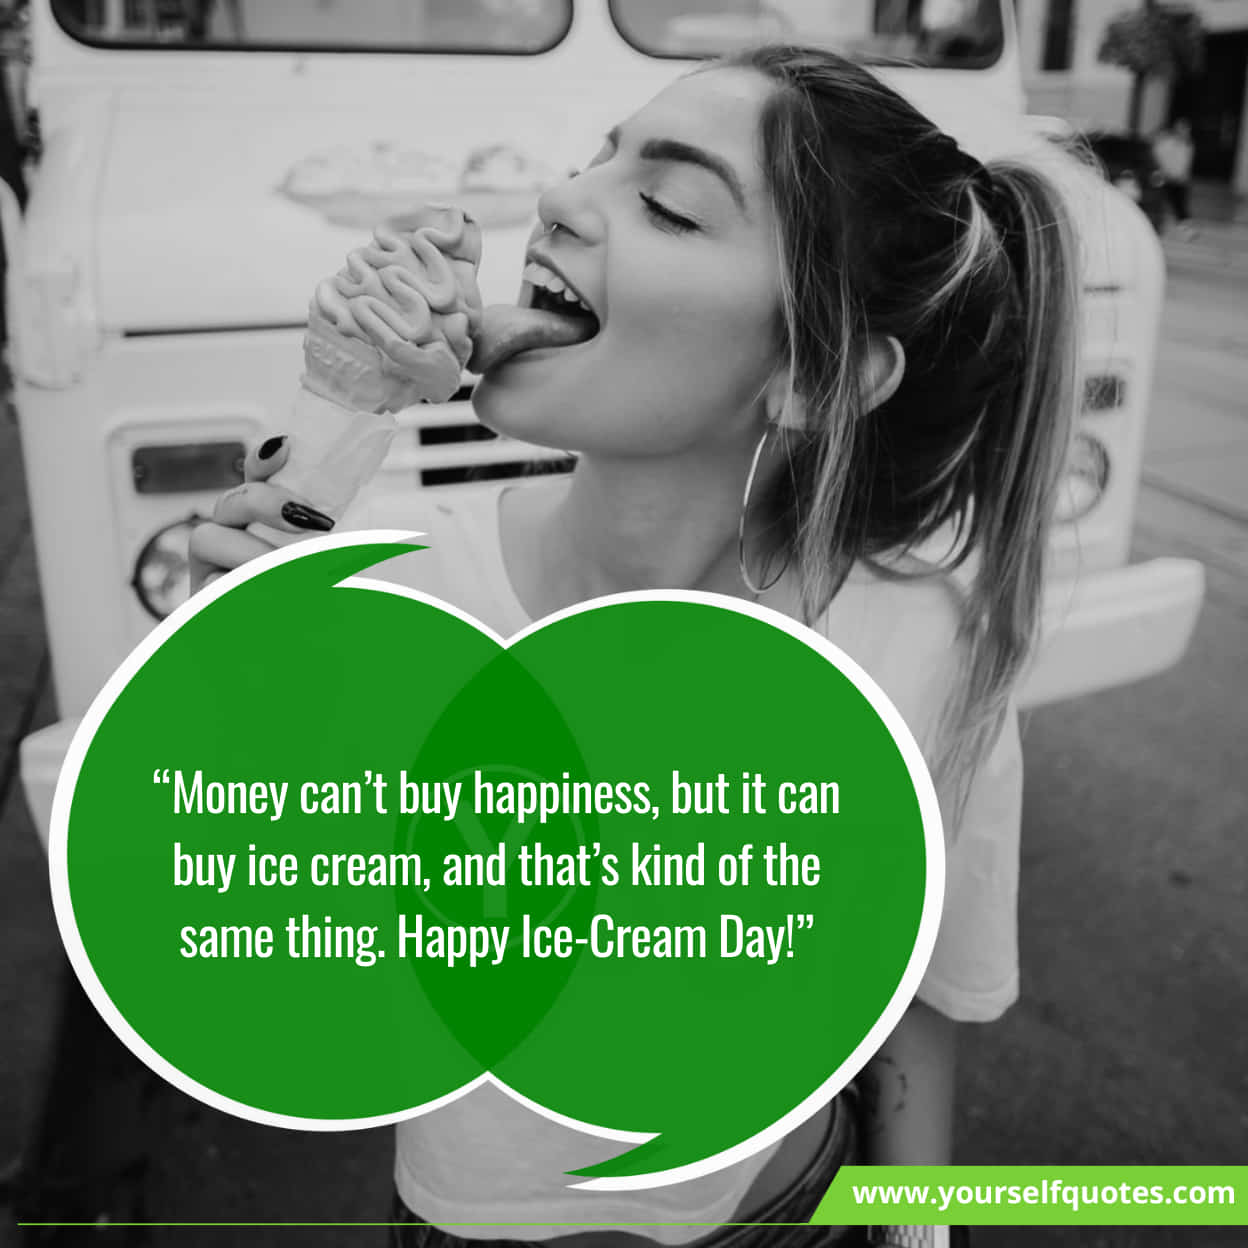 Ice-Cream Day Best Messages